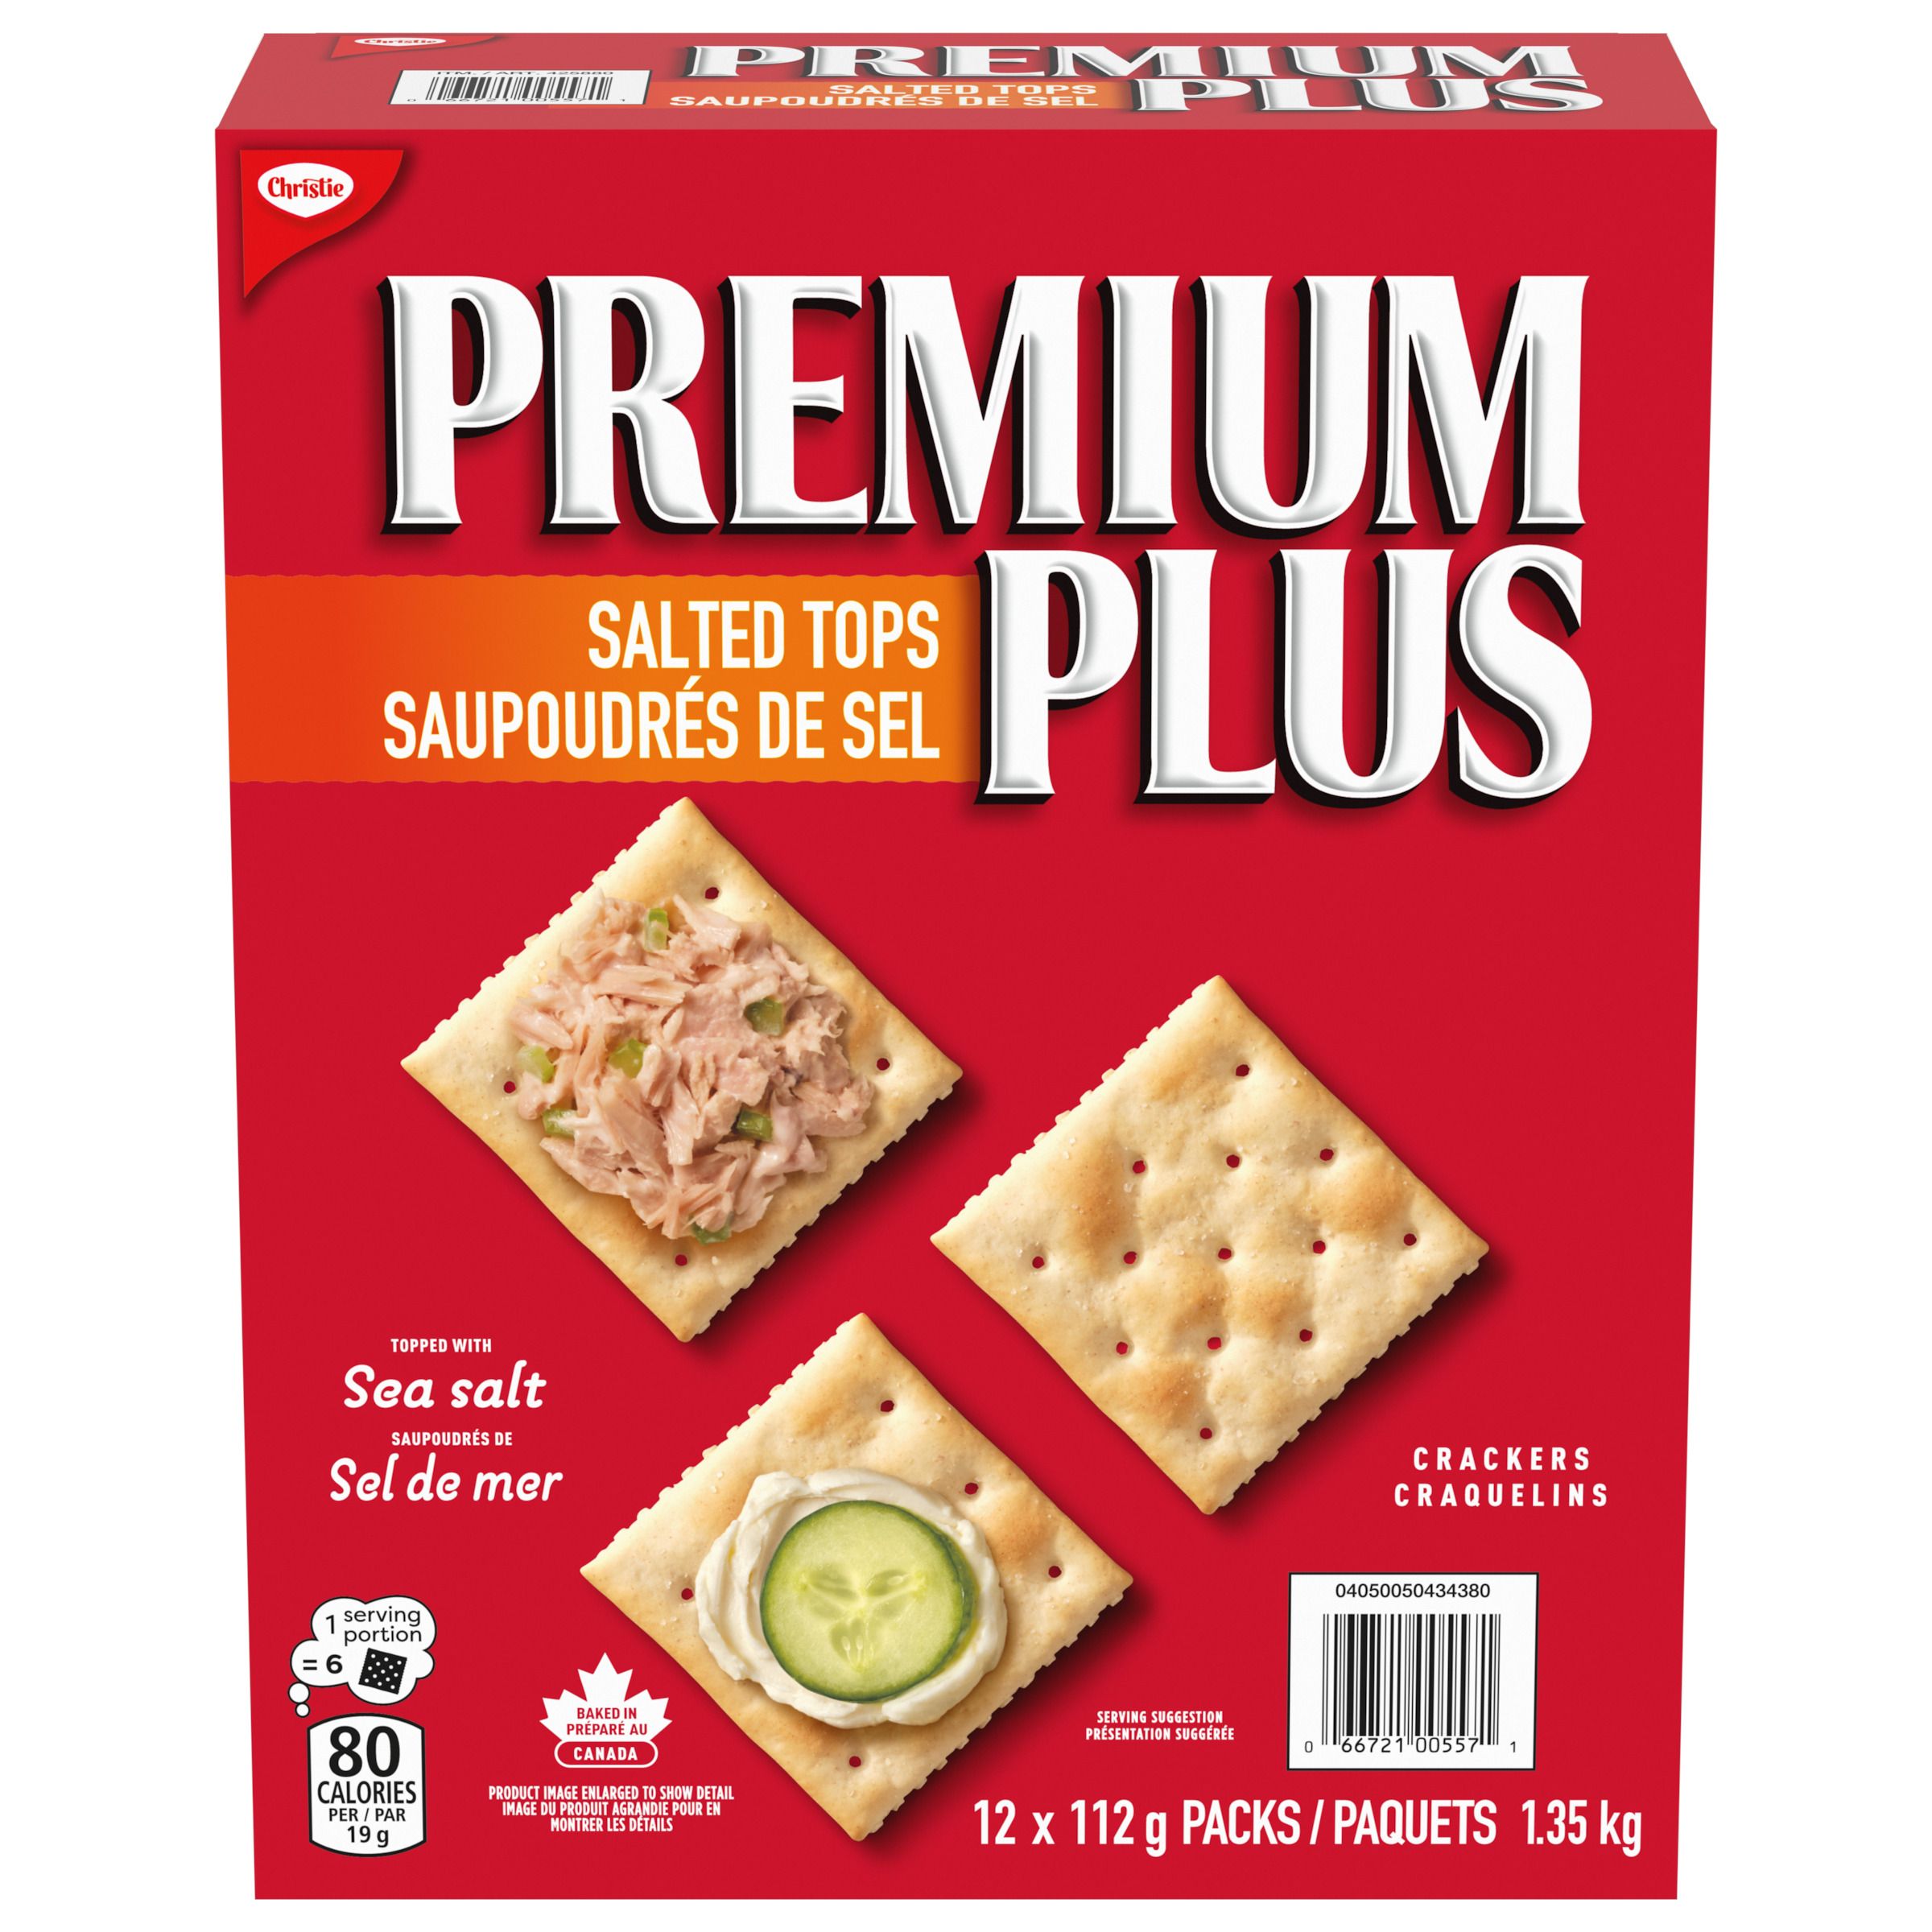 PREMIUM PLUS Salted Tops Club Pack Crackers 1.35 KG